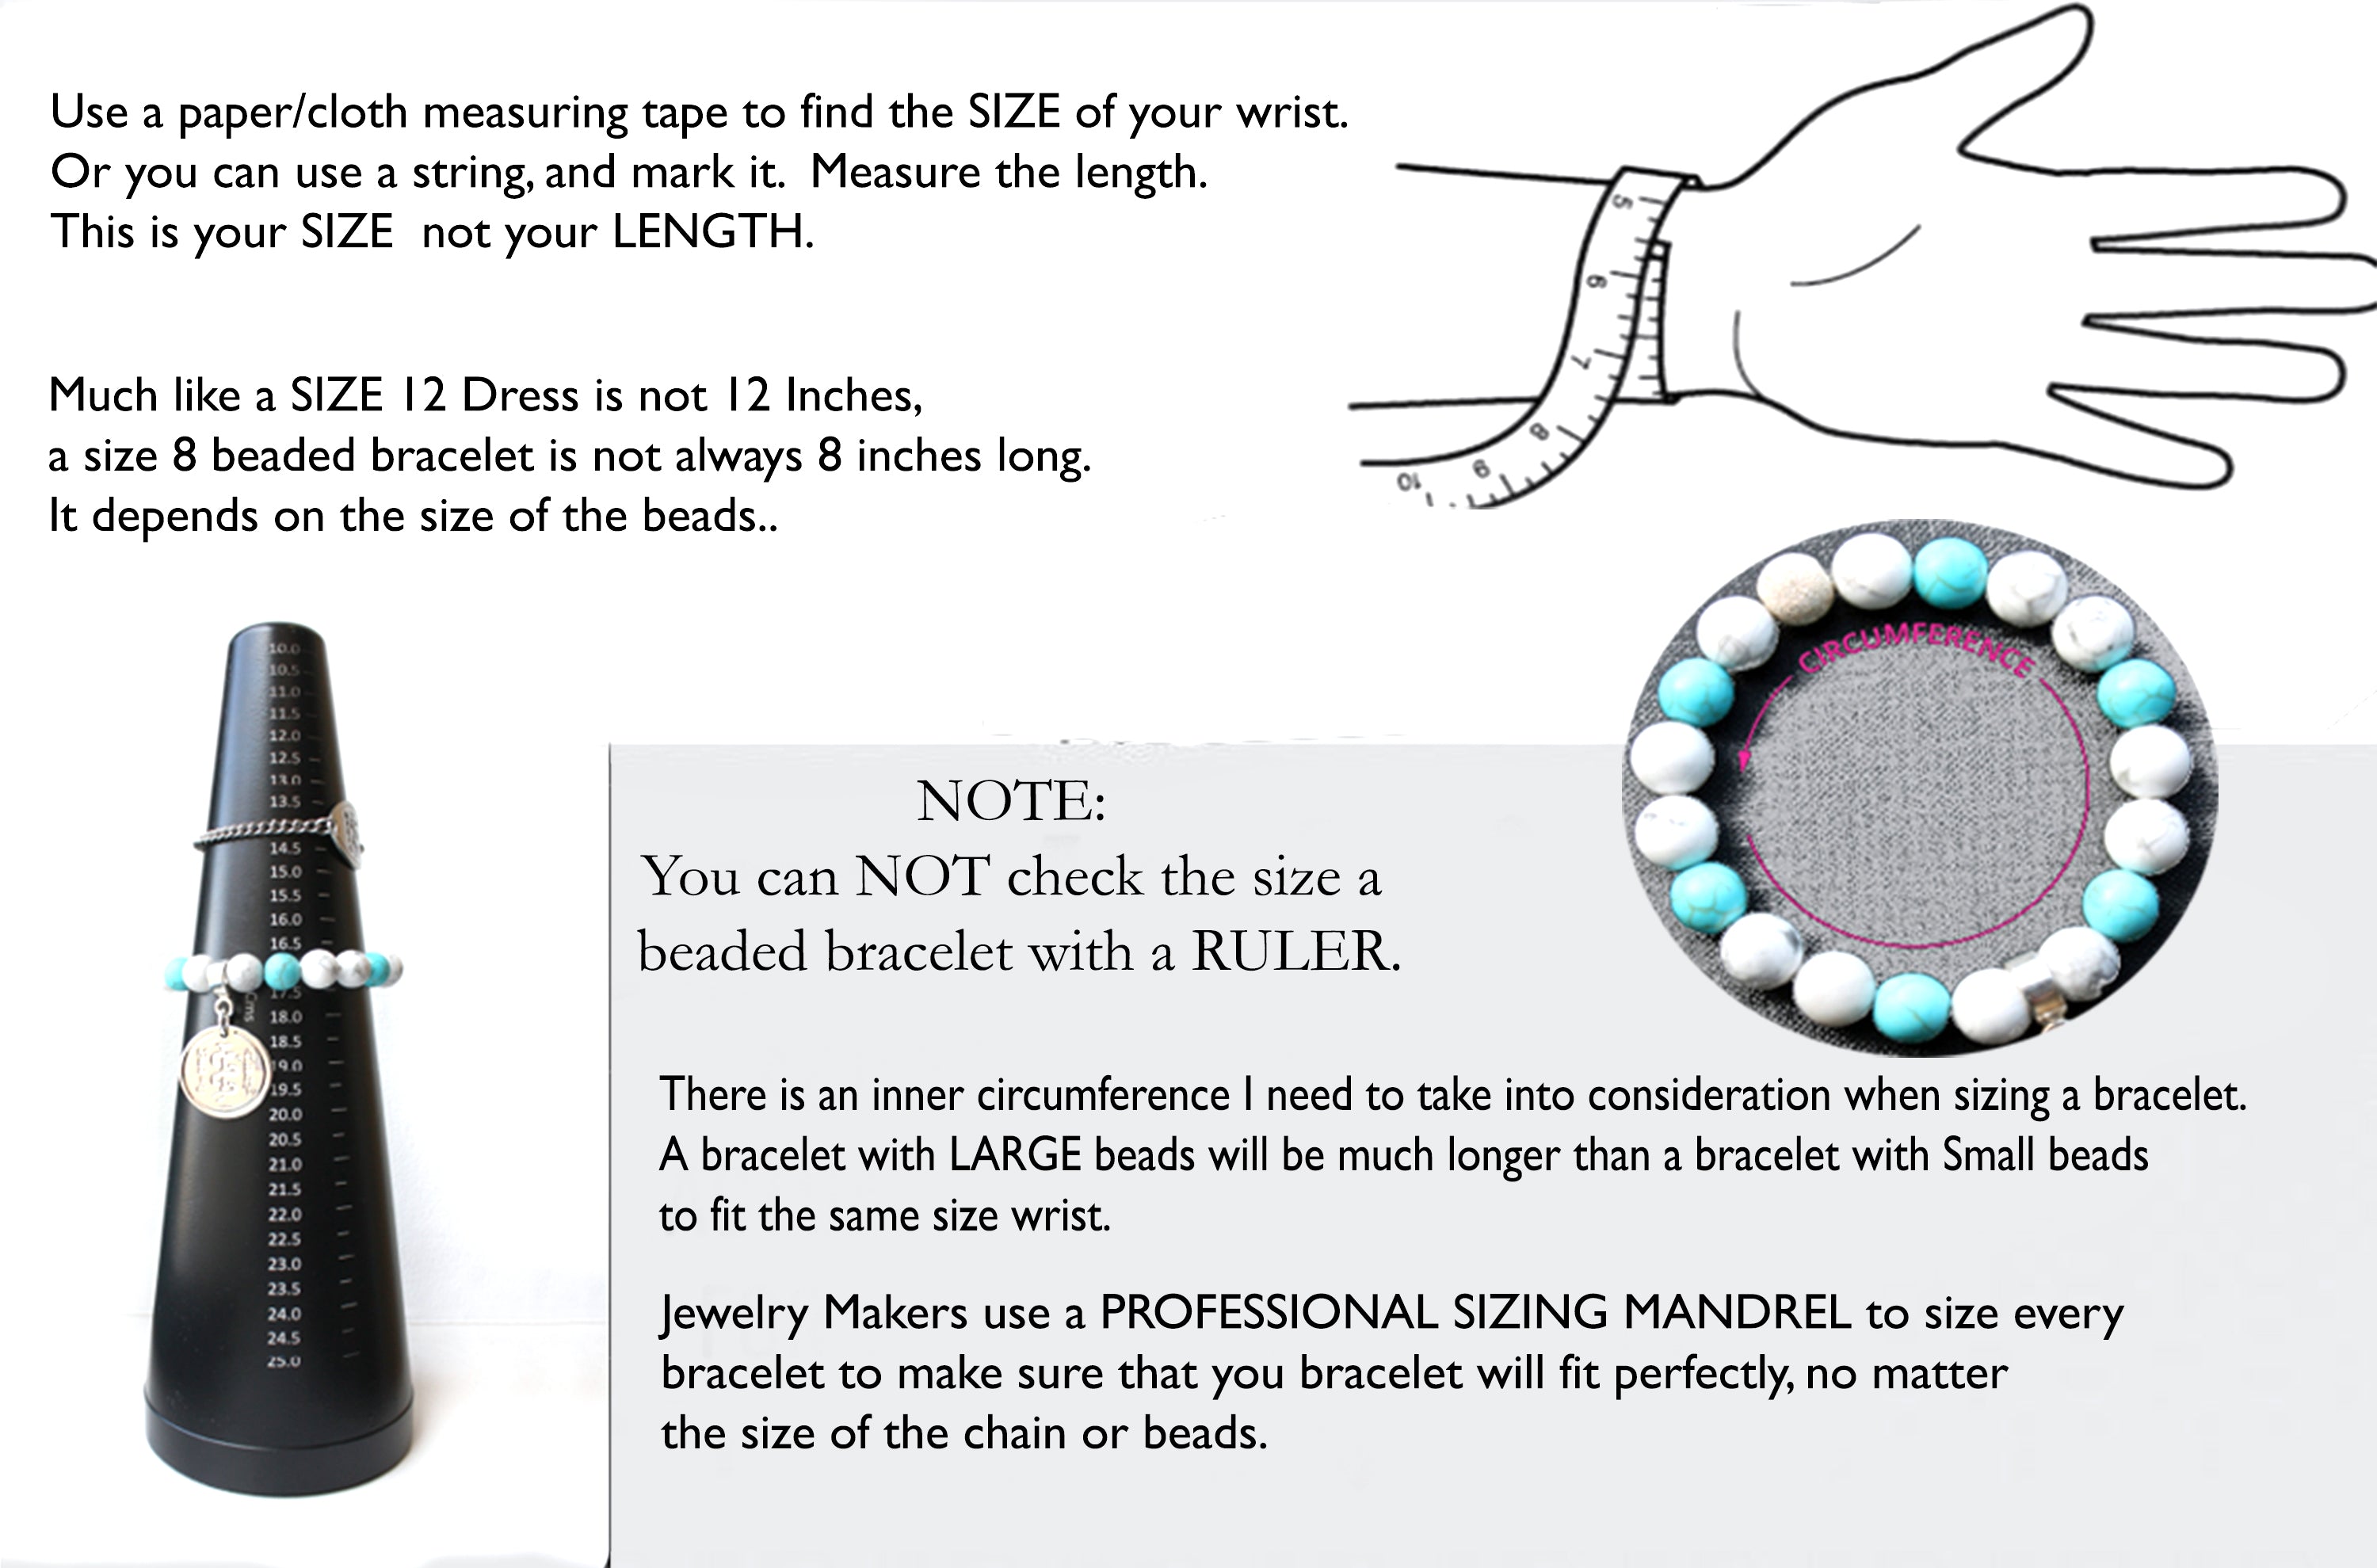 Mens Tourmaline Bracelet, DZI Evil Eye Protection Bracelet, STRENGTH &amp; COURAGE Root Chakra Bracelet, Jewels for Gents, Jewels for Gents